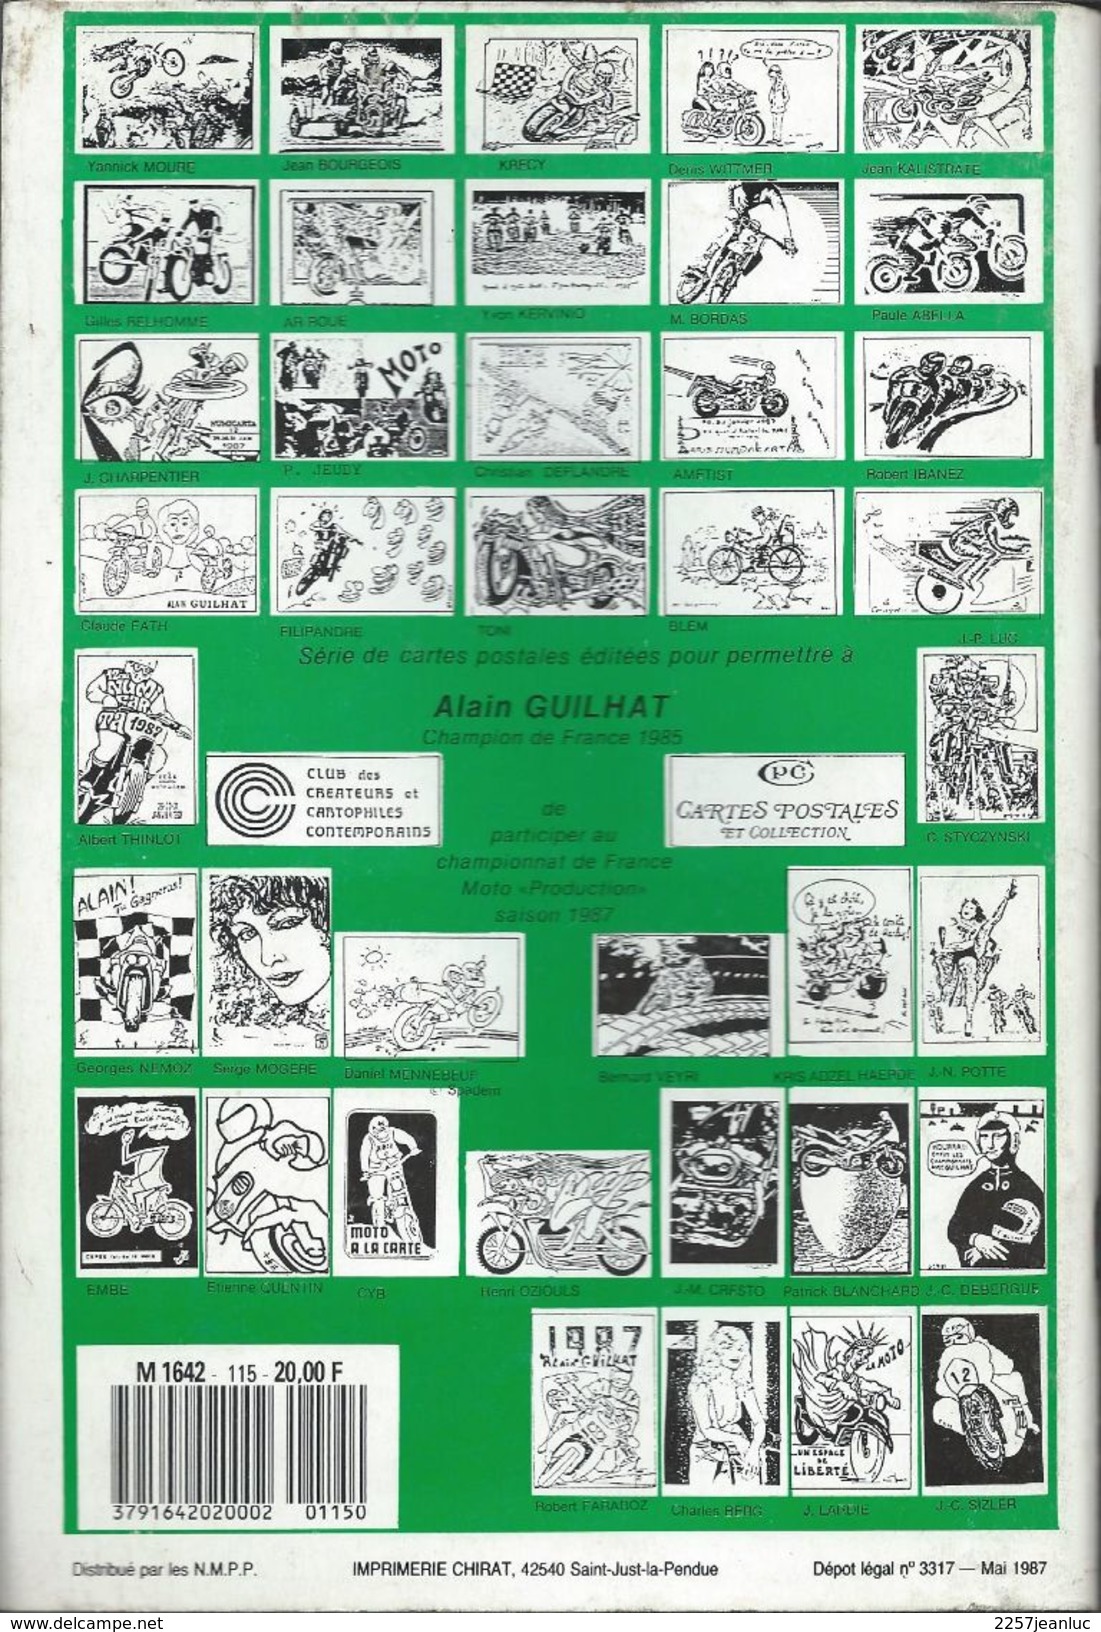 Cartes Postales Et Collections Juin1987  Magazines N: 115 Llustration &  Thèmes Divers 98 Pages - Französisch